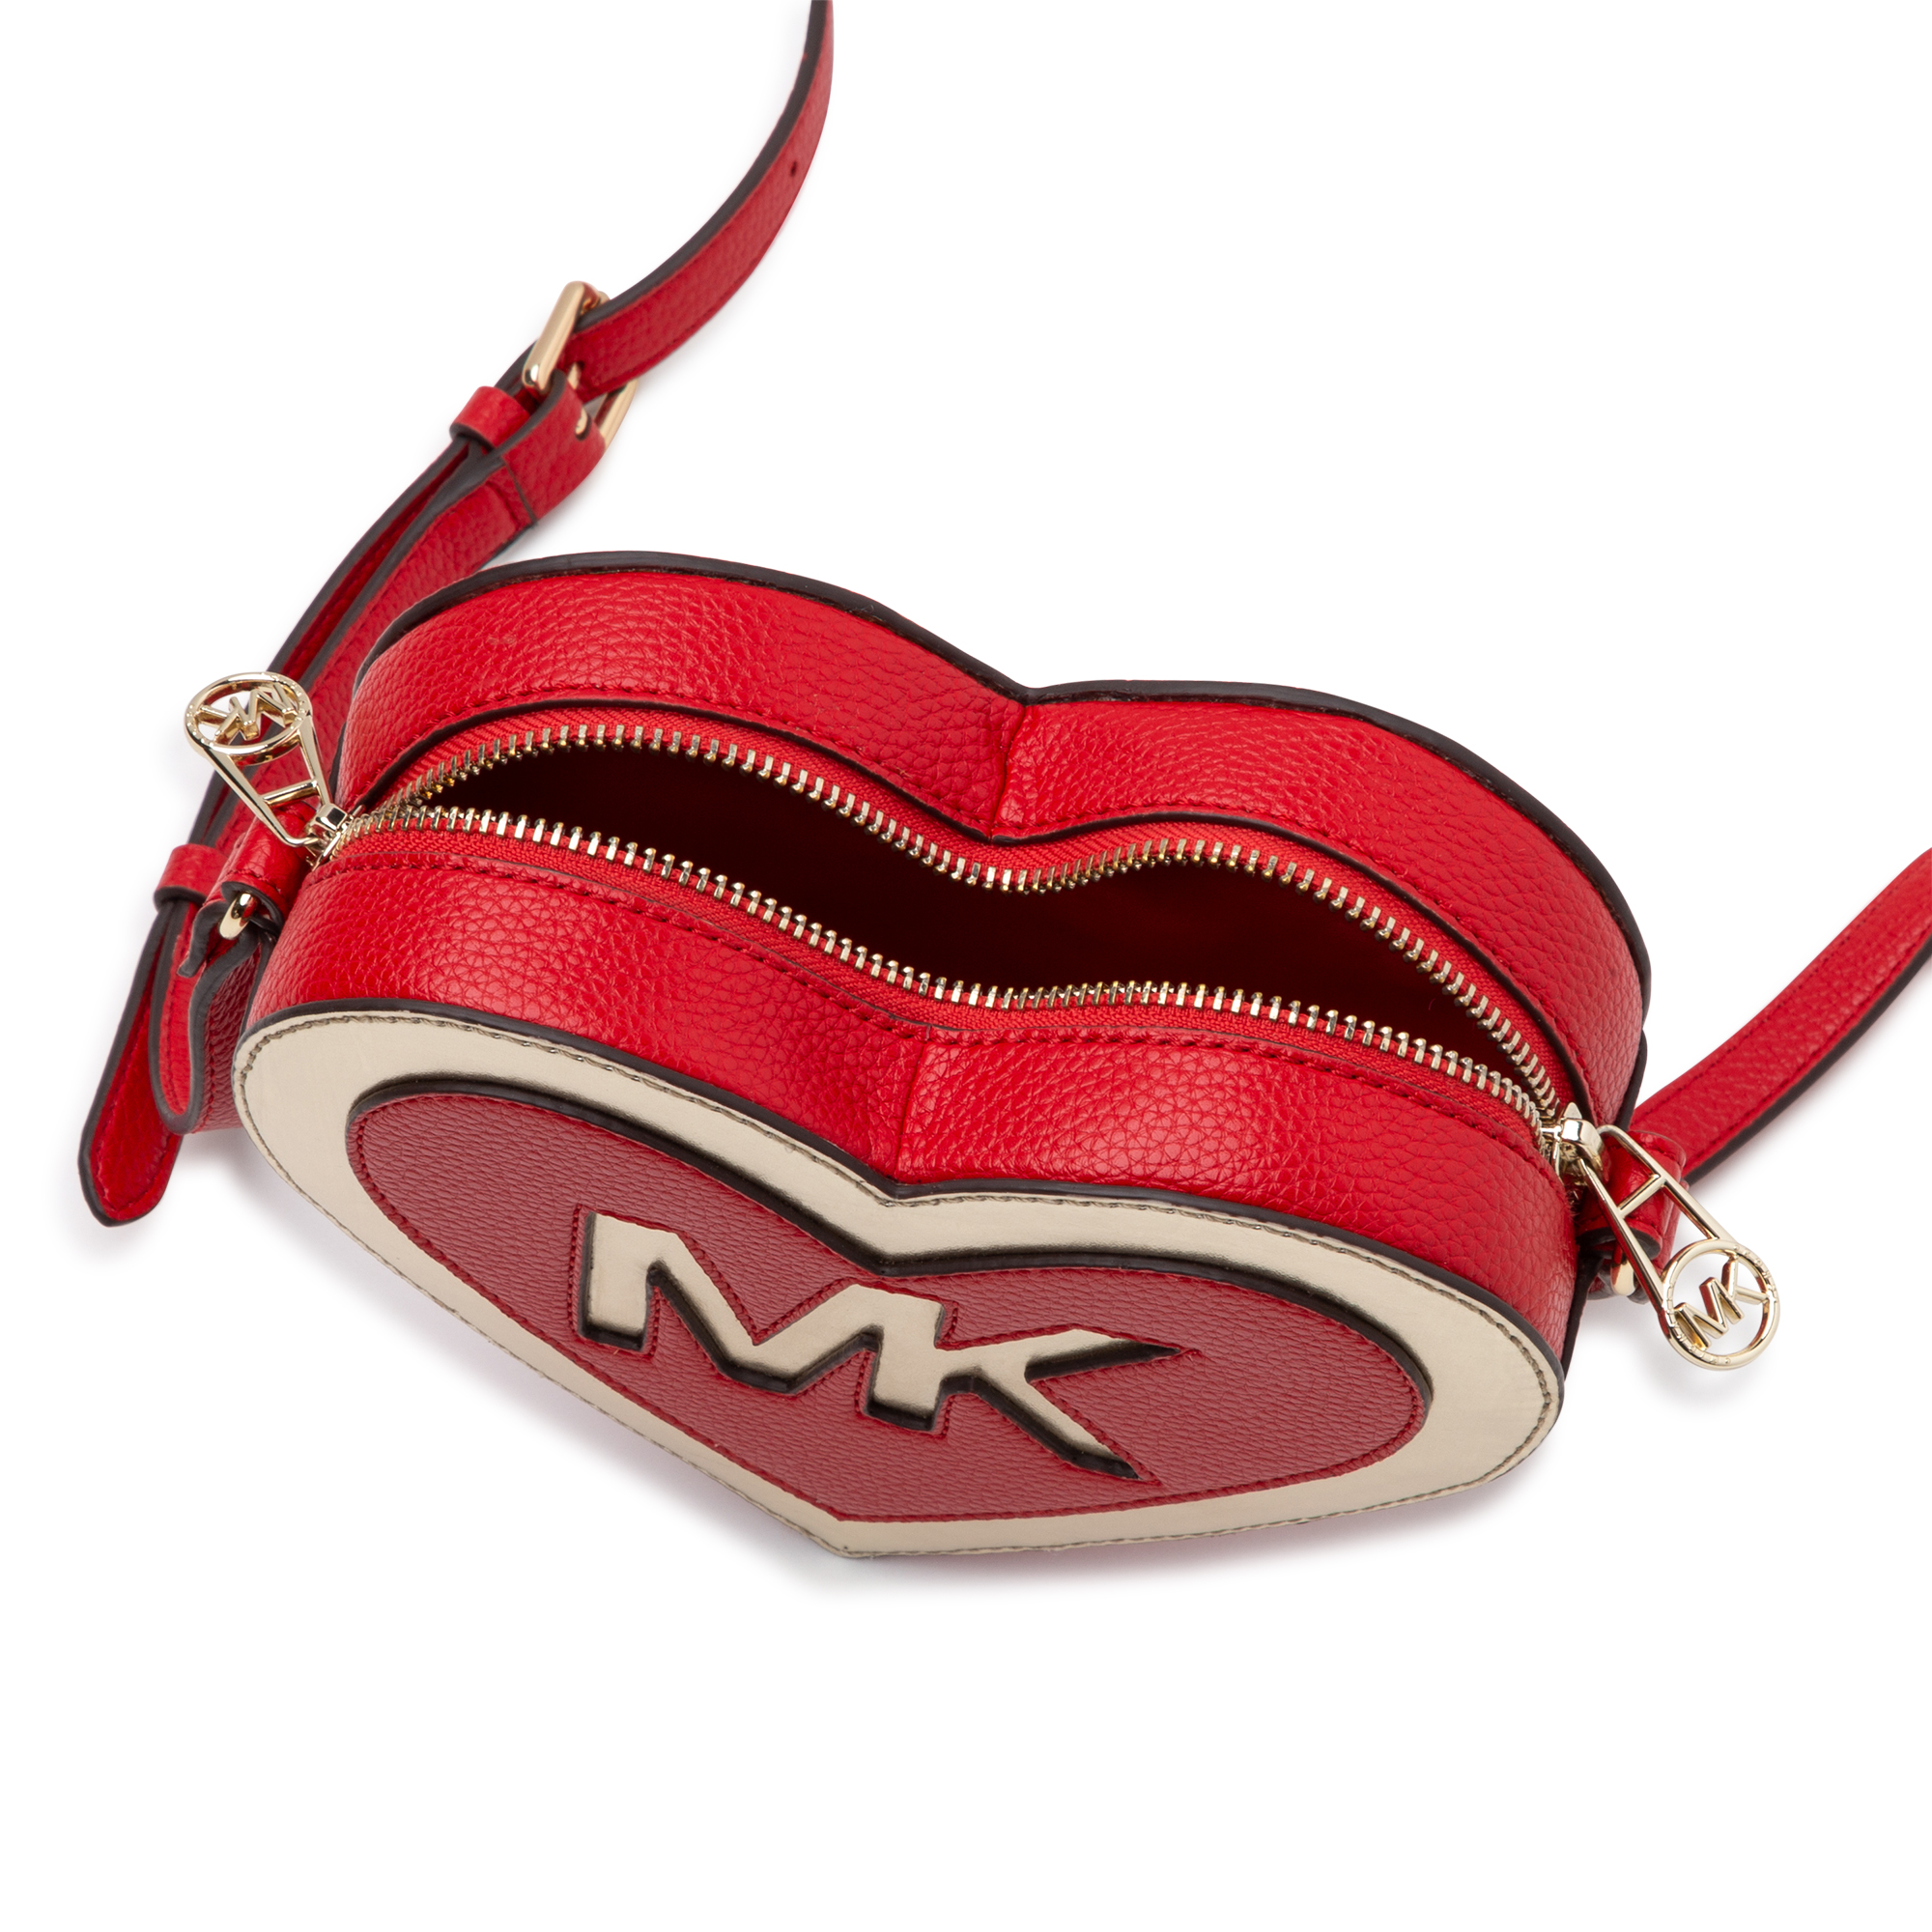 Heart-Printed Handbag with Shoulder Strap MICHAEL KORS for GIRL